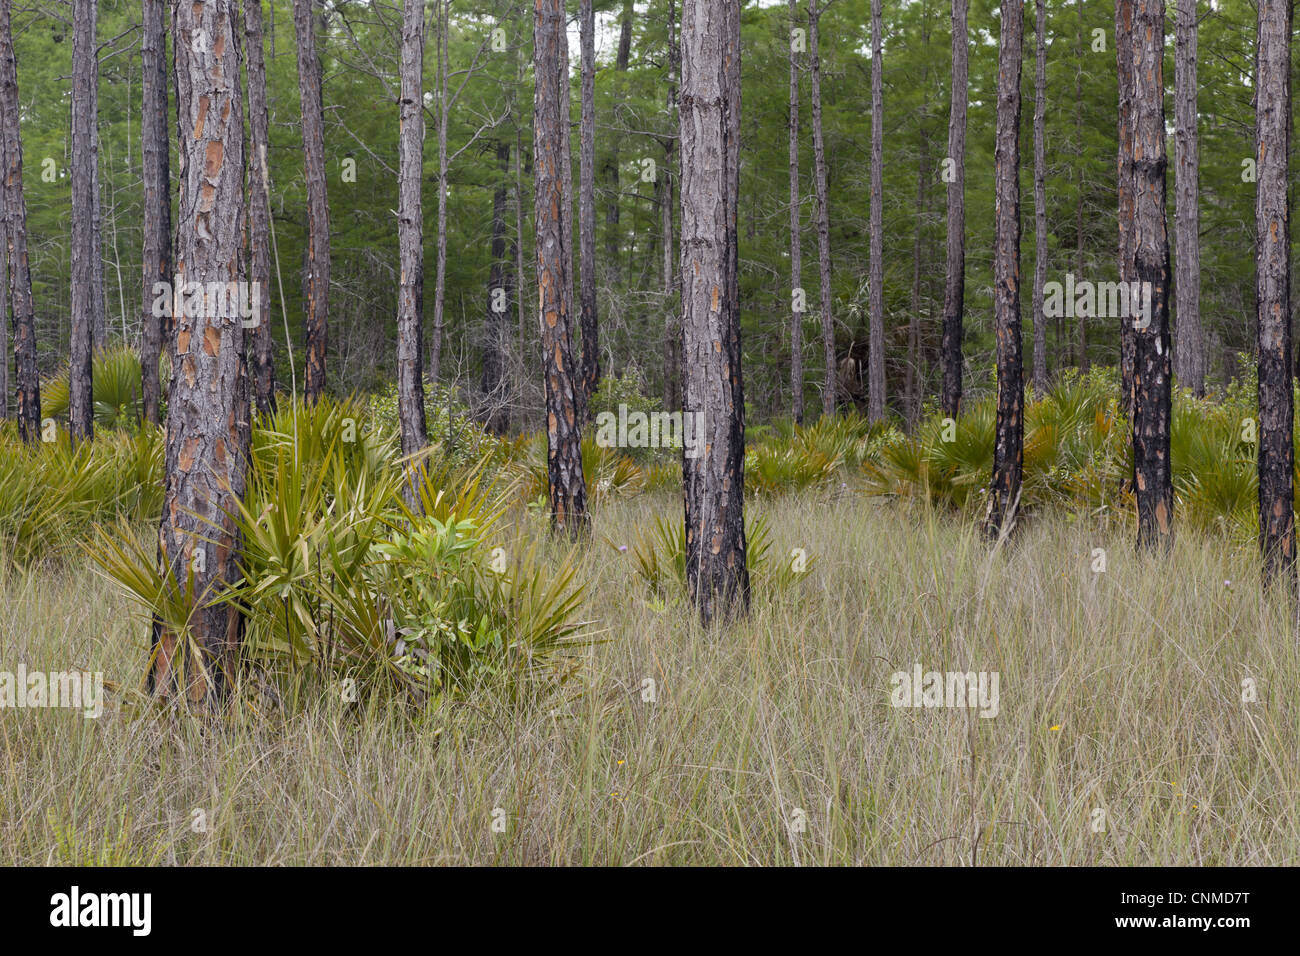 South Florida Slash Pine Pinus elliottii var densa Saw Palmetto Serenoa repens woodland habitat Big Cypress Swamp Florida U.S.A. Stock Photo